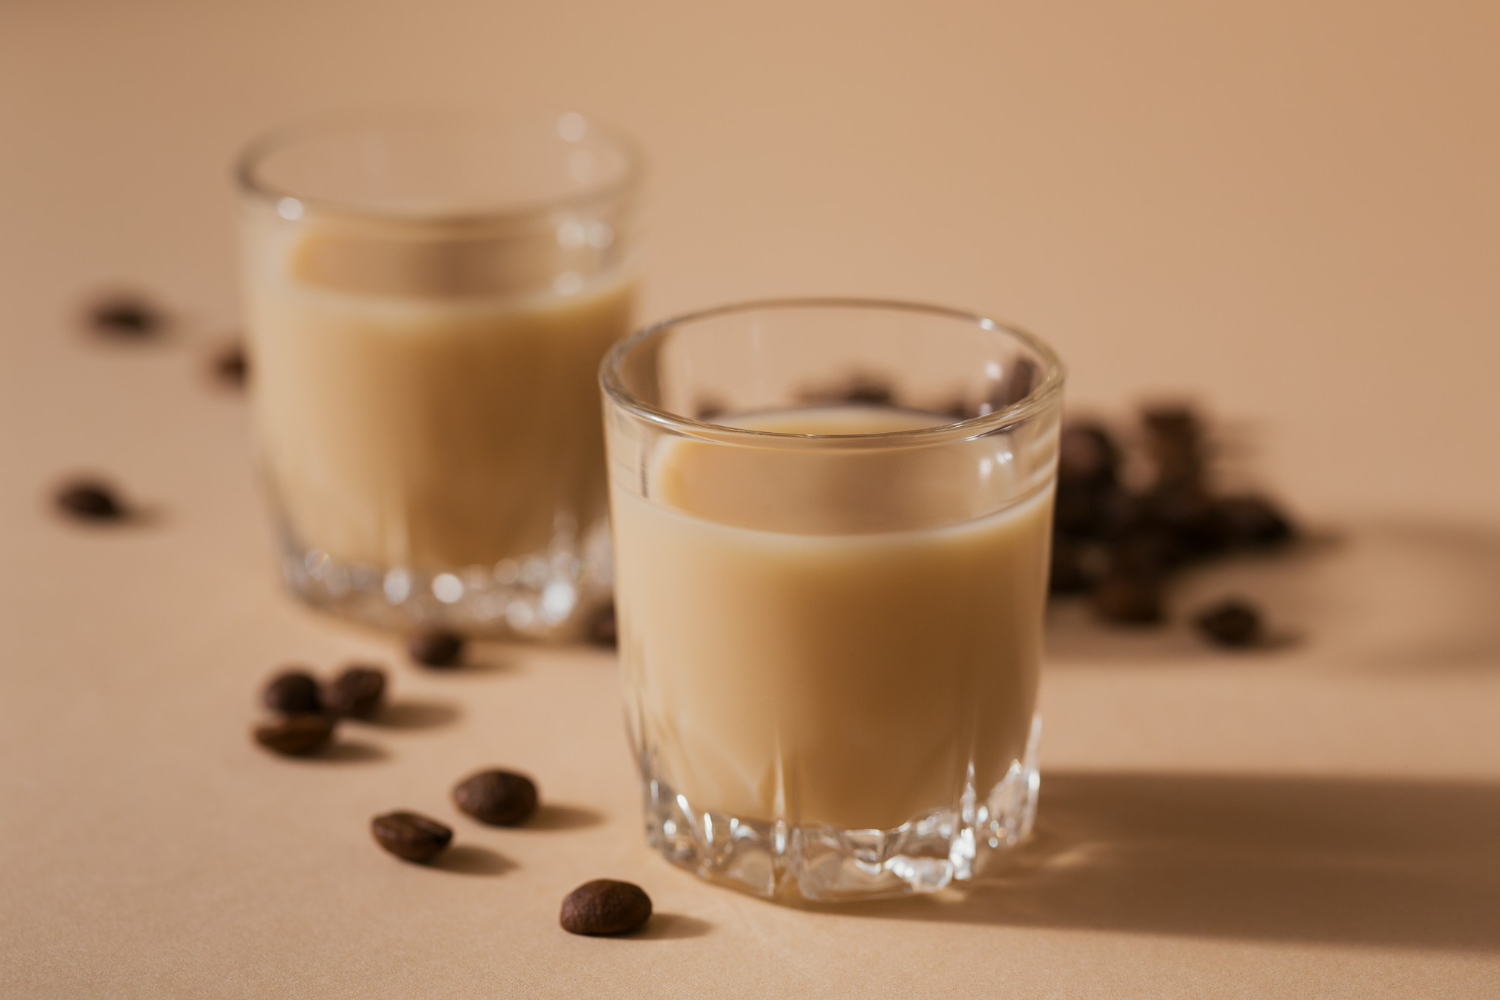 Aprenda a fazer um delicioso licor cremoso de café, ideal para as festas juninas